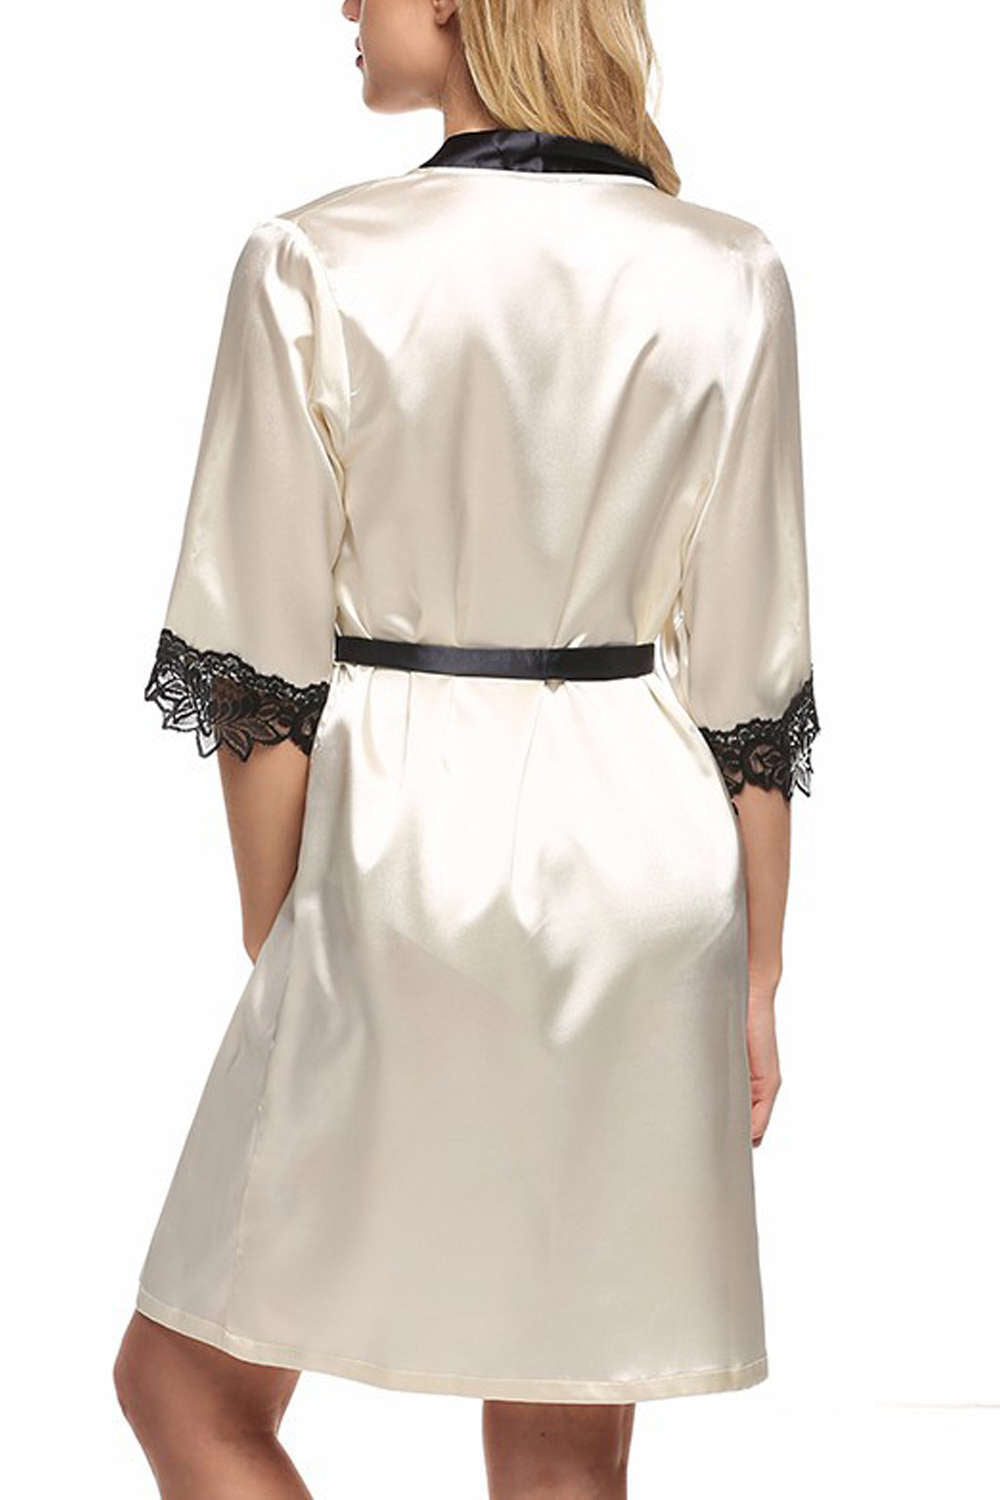 Iyasson Half Sleeves Lace Kimono Robe 